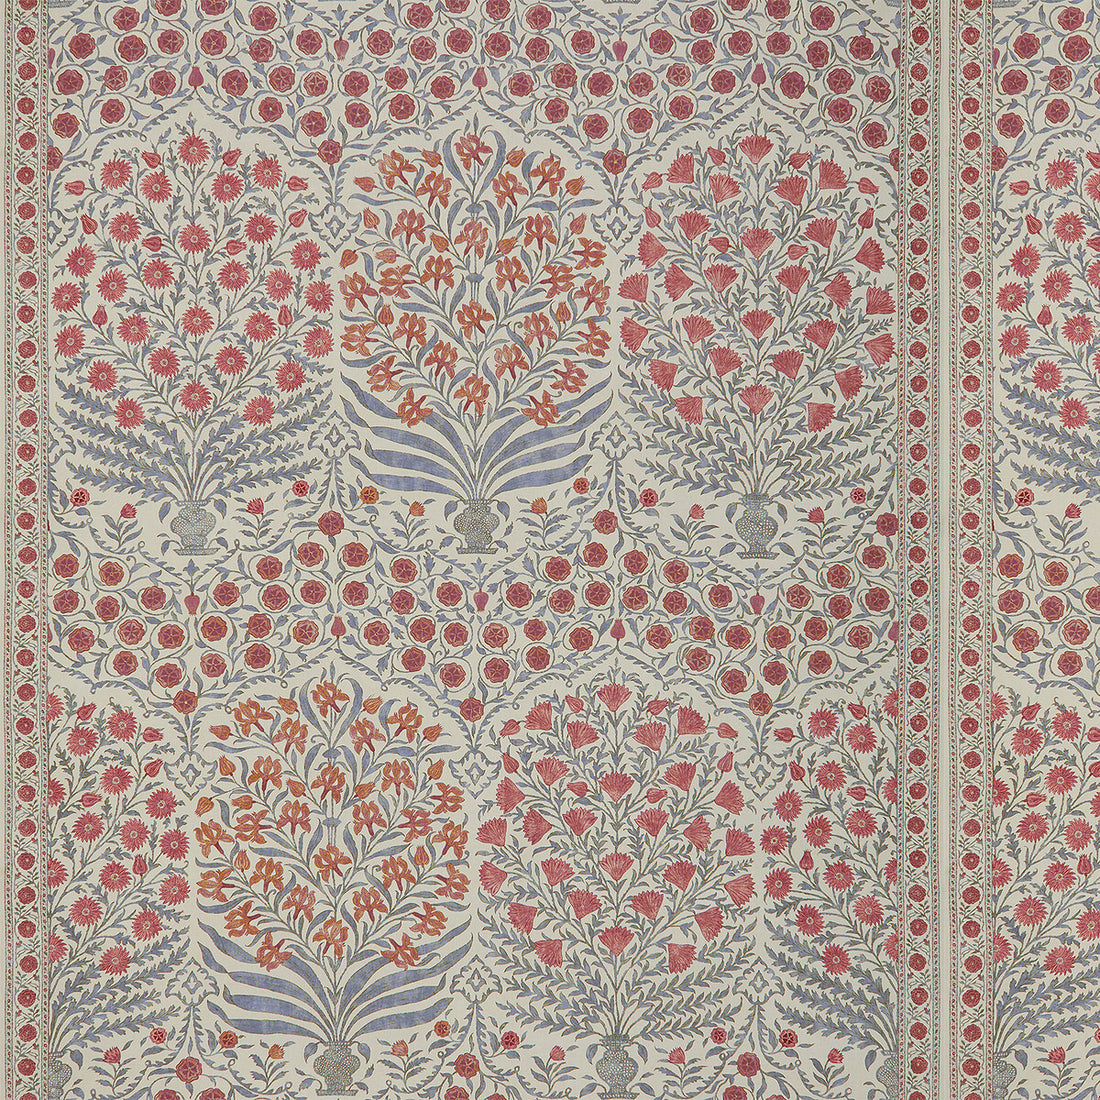 Sameera fabric in red/blue color - pattern 2017108.519.0 - by Lee Jofa in the Oscar De La Renta III collection